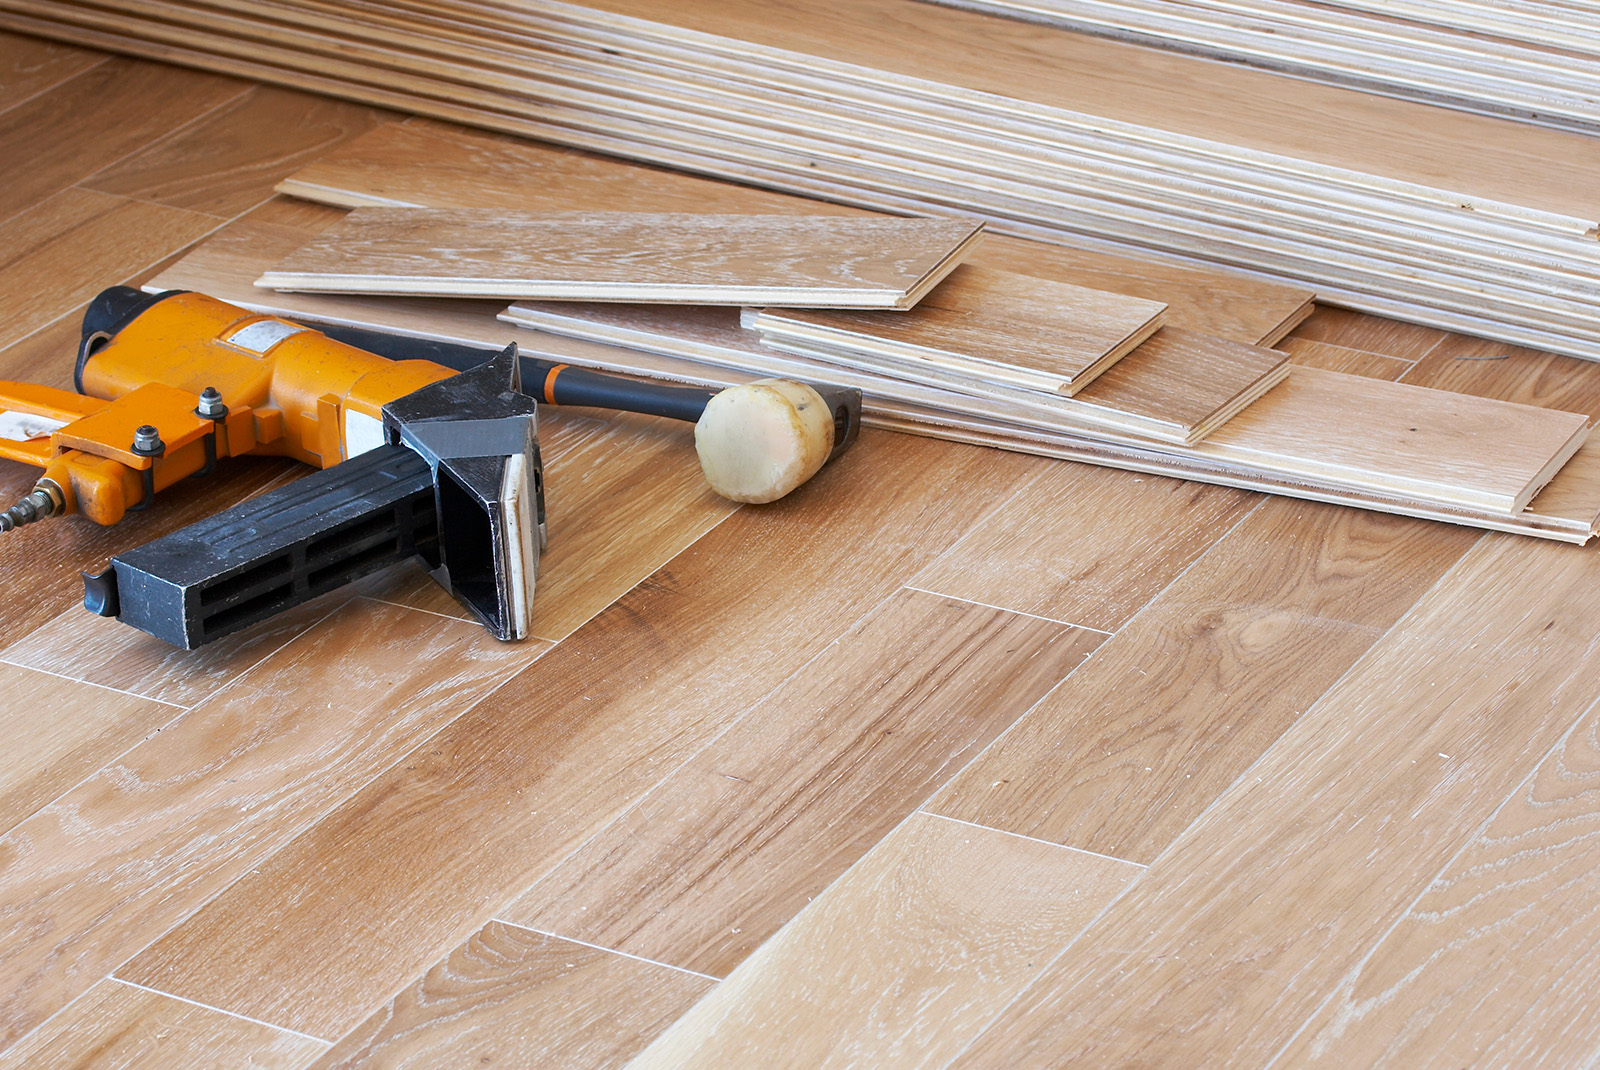 Installing wood floors